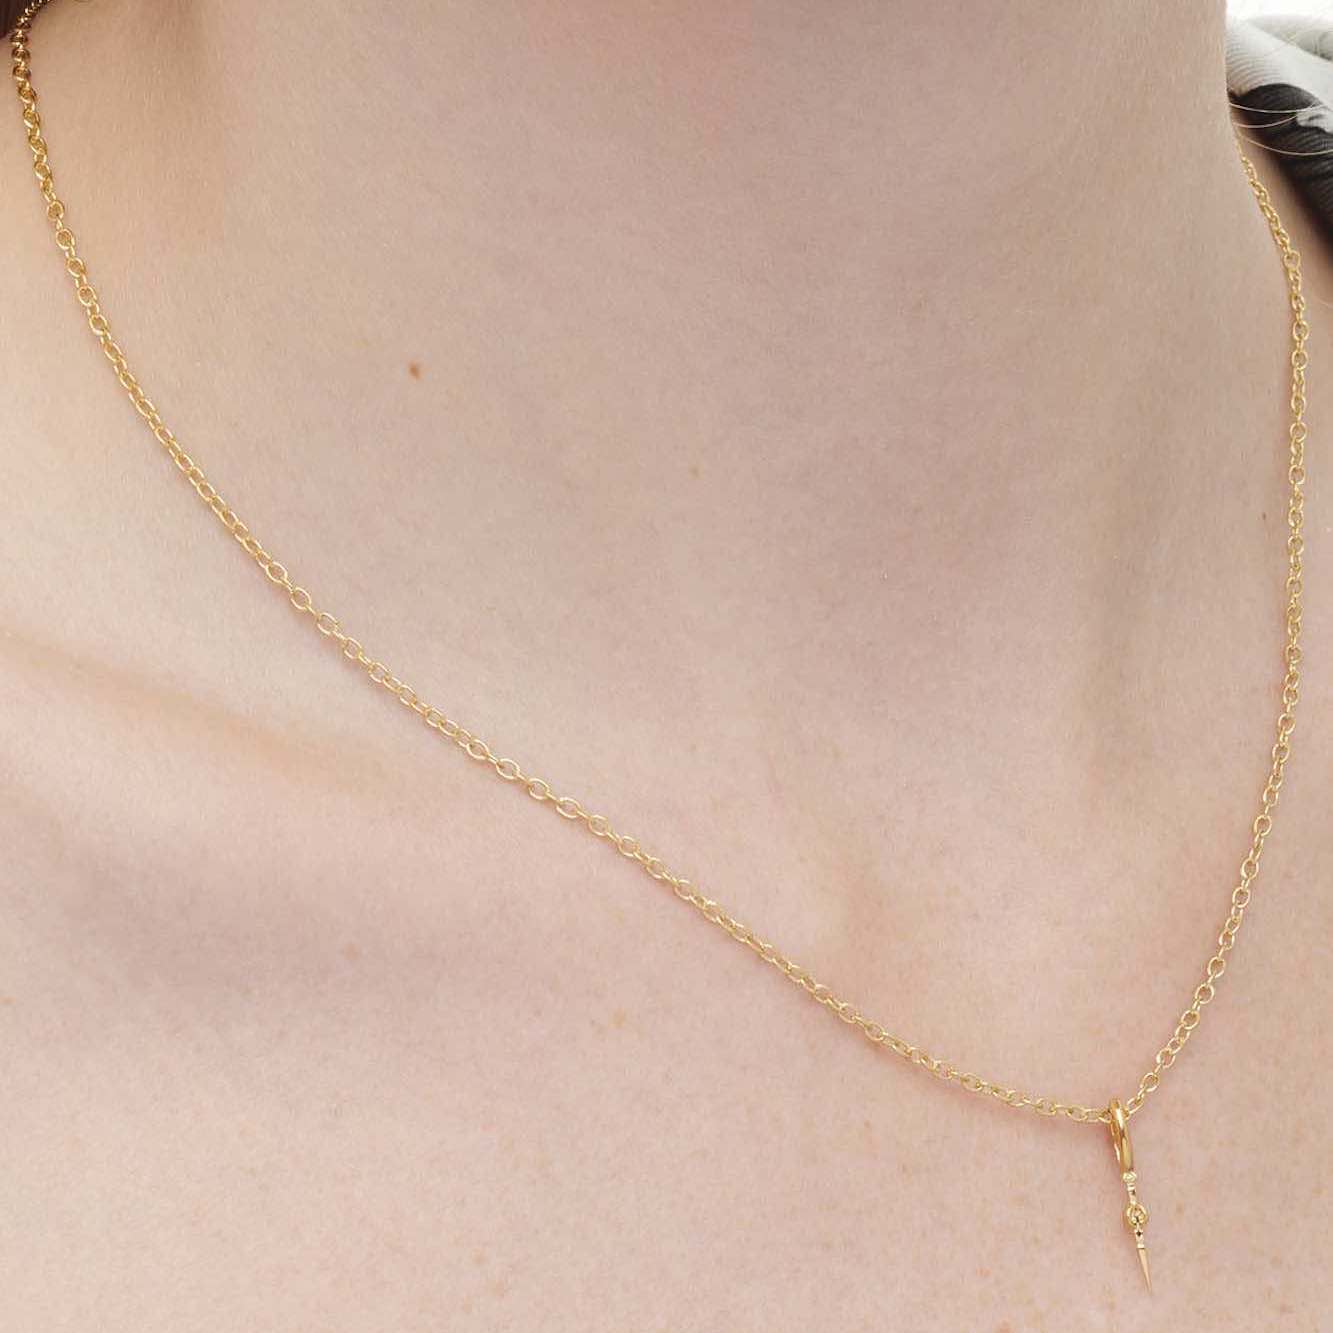 Goddess Freya Mini Gold Necklace on model